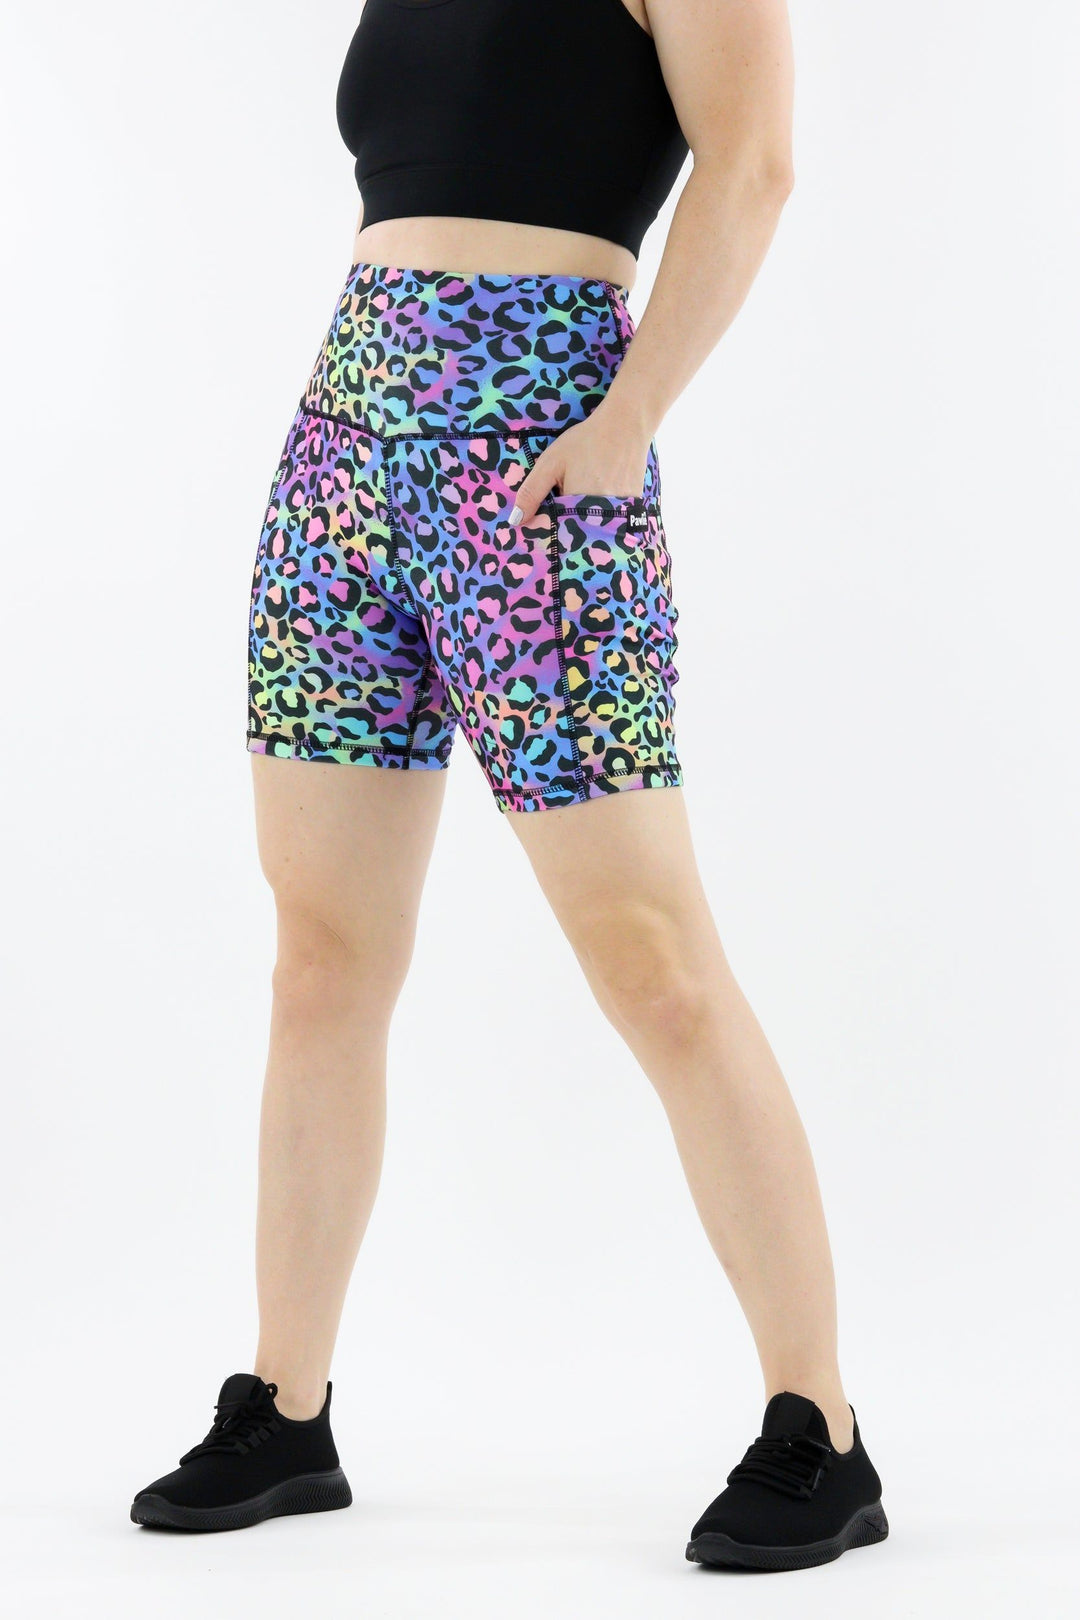 Vivid Leopard - Hybrid 2.0 - Leg Pockets - Mid Shorts Hybrid Shorts Pawlie   